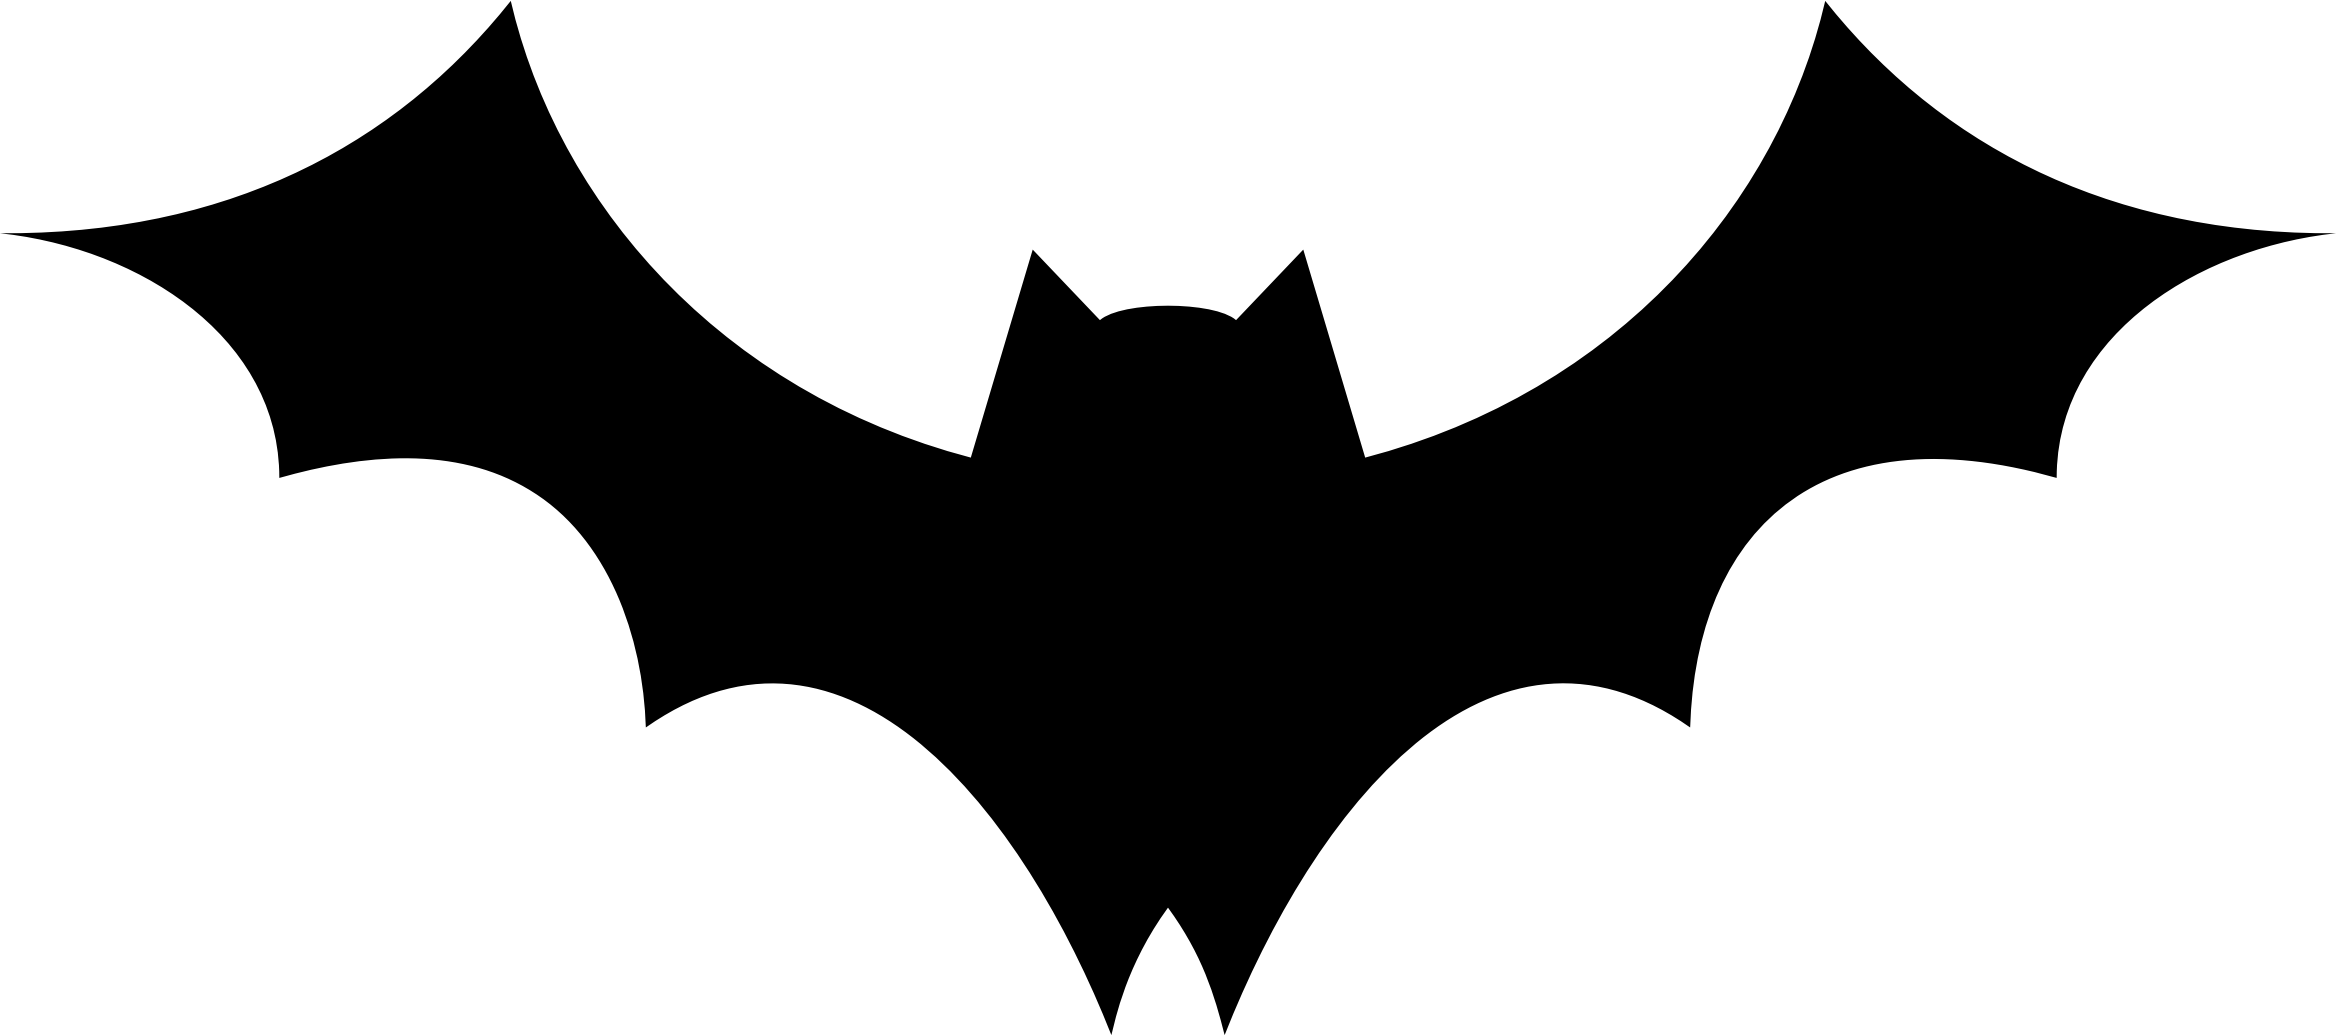 Bat Silhouette Images for Logo - Clipart Bat Silhouette